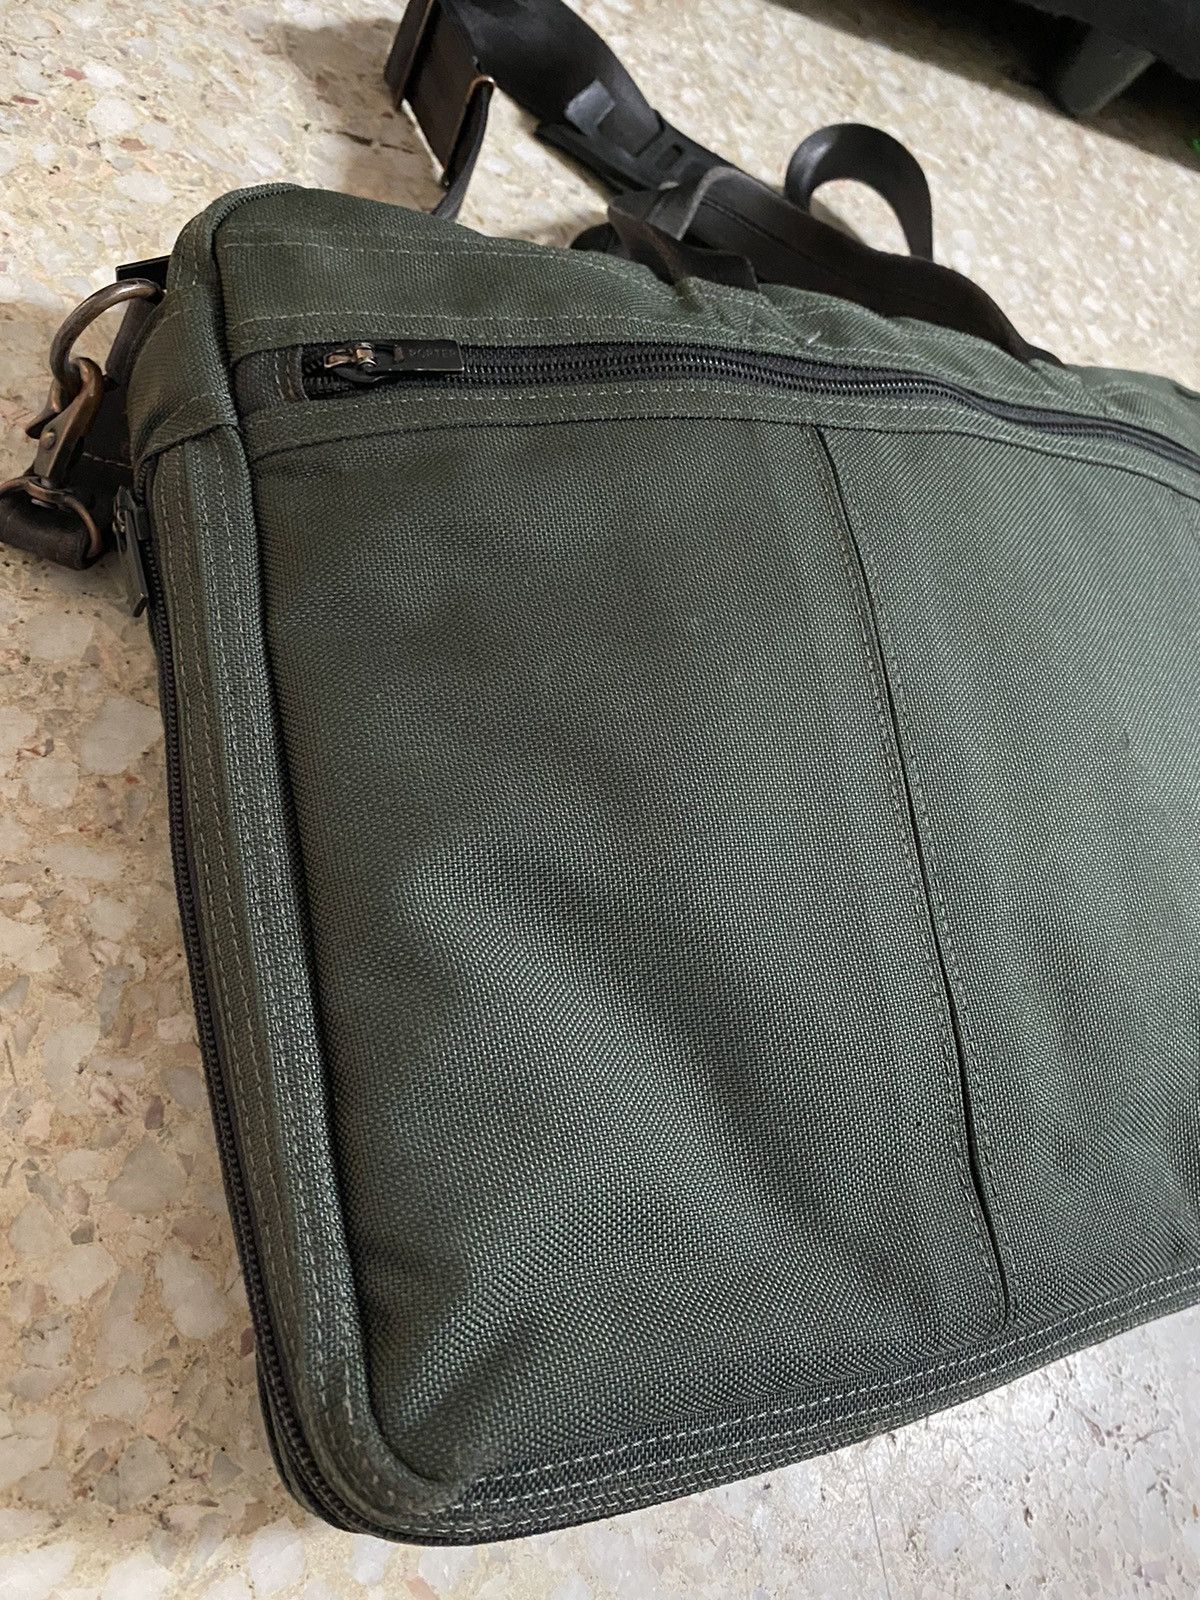 Porter Cordura Messenger Bag Green Army Made in Japan - 5